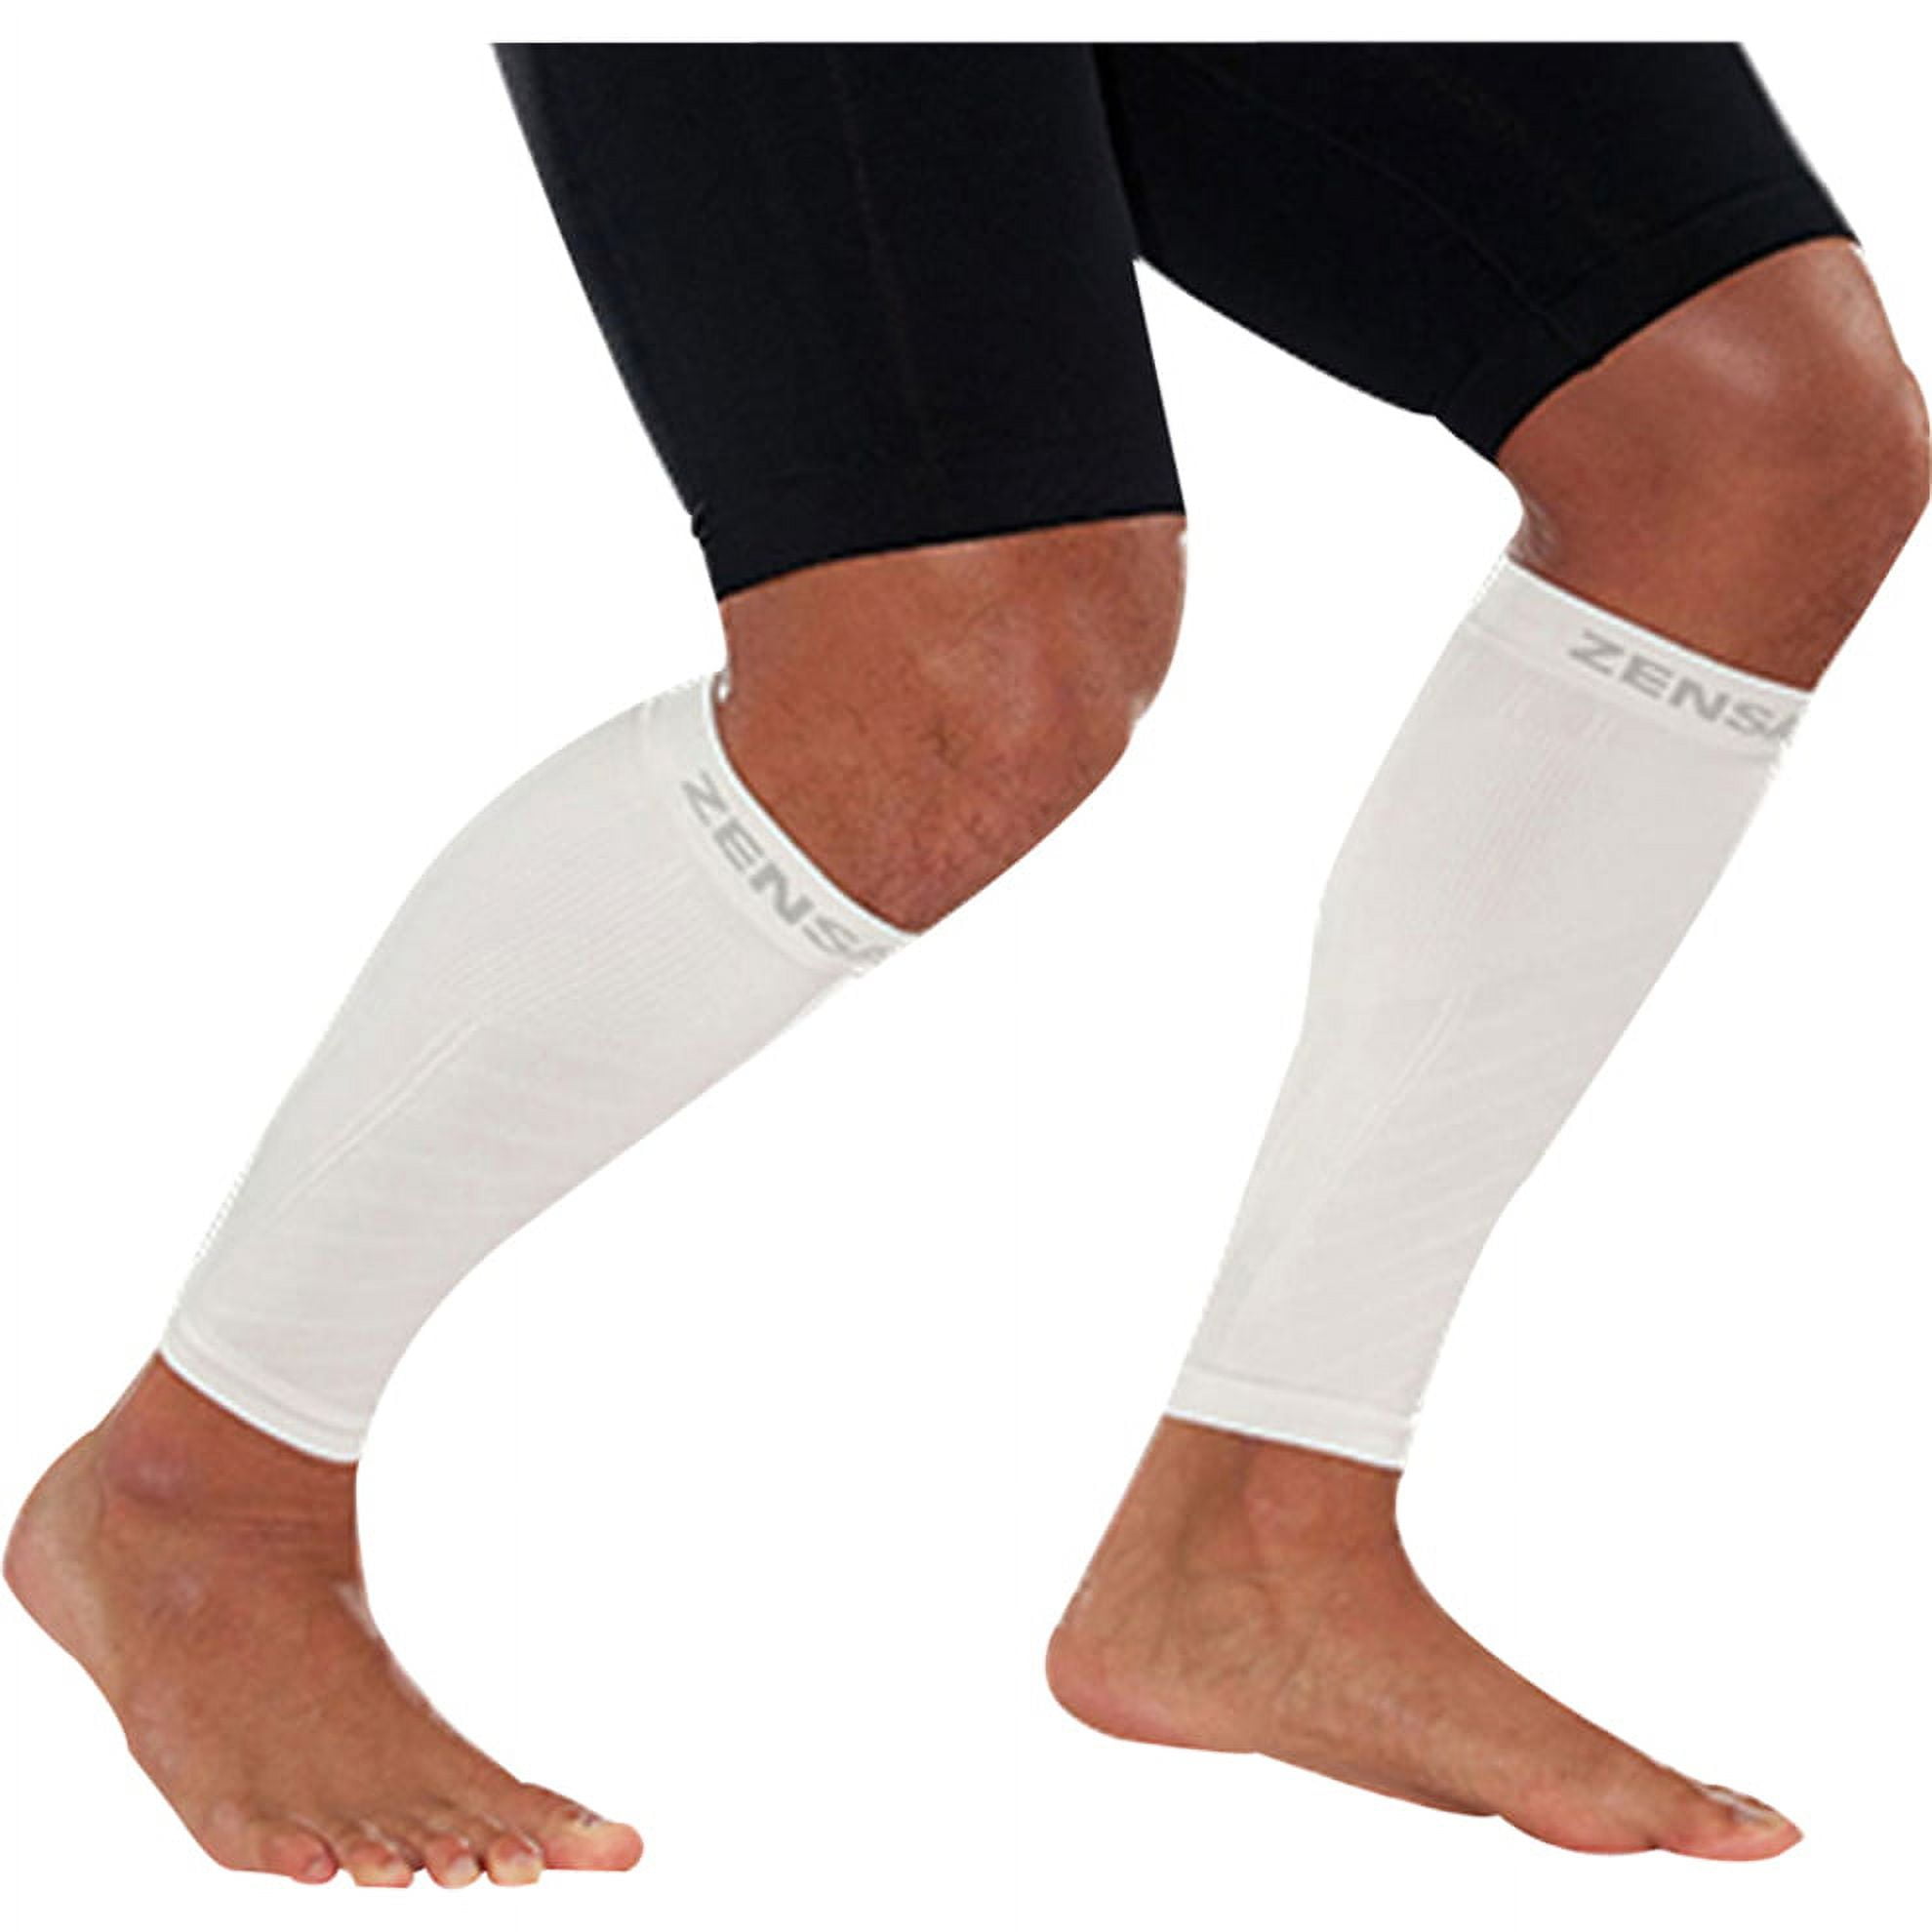 Zensah Compression Leg Sleeves 